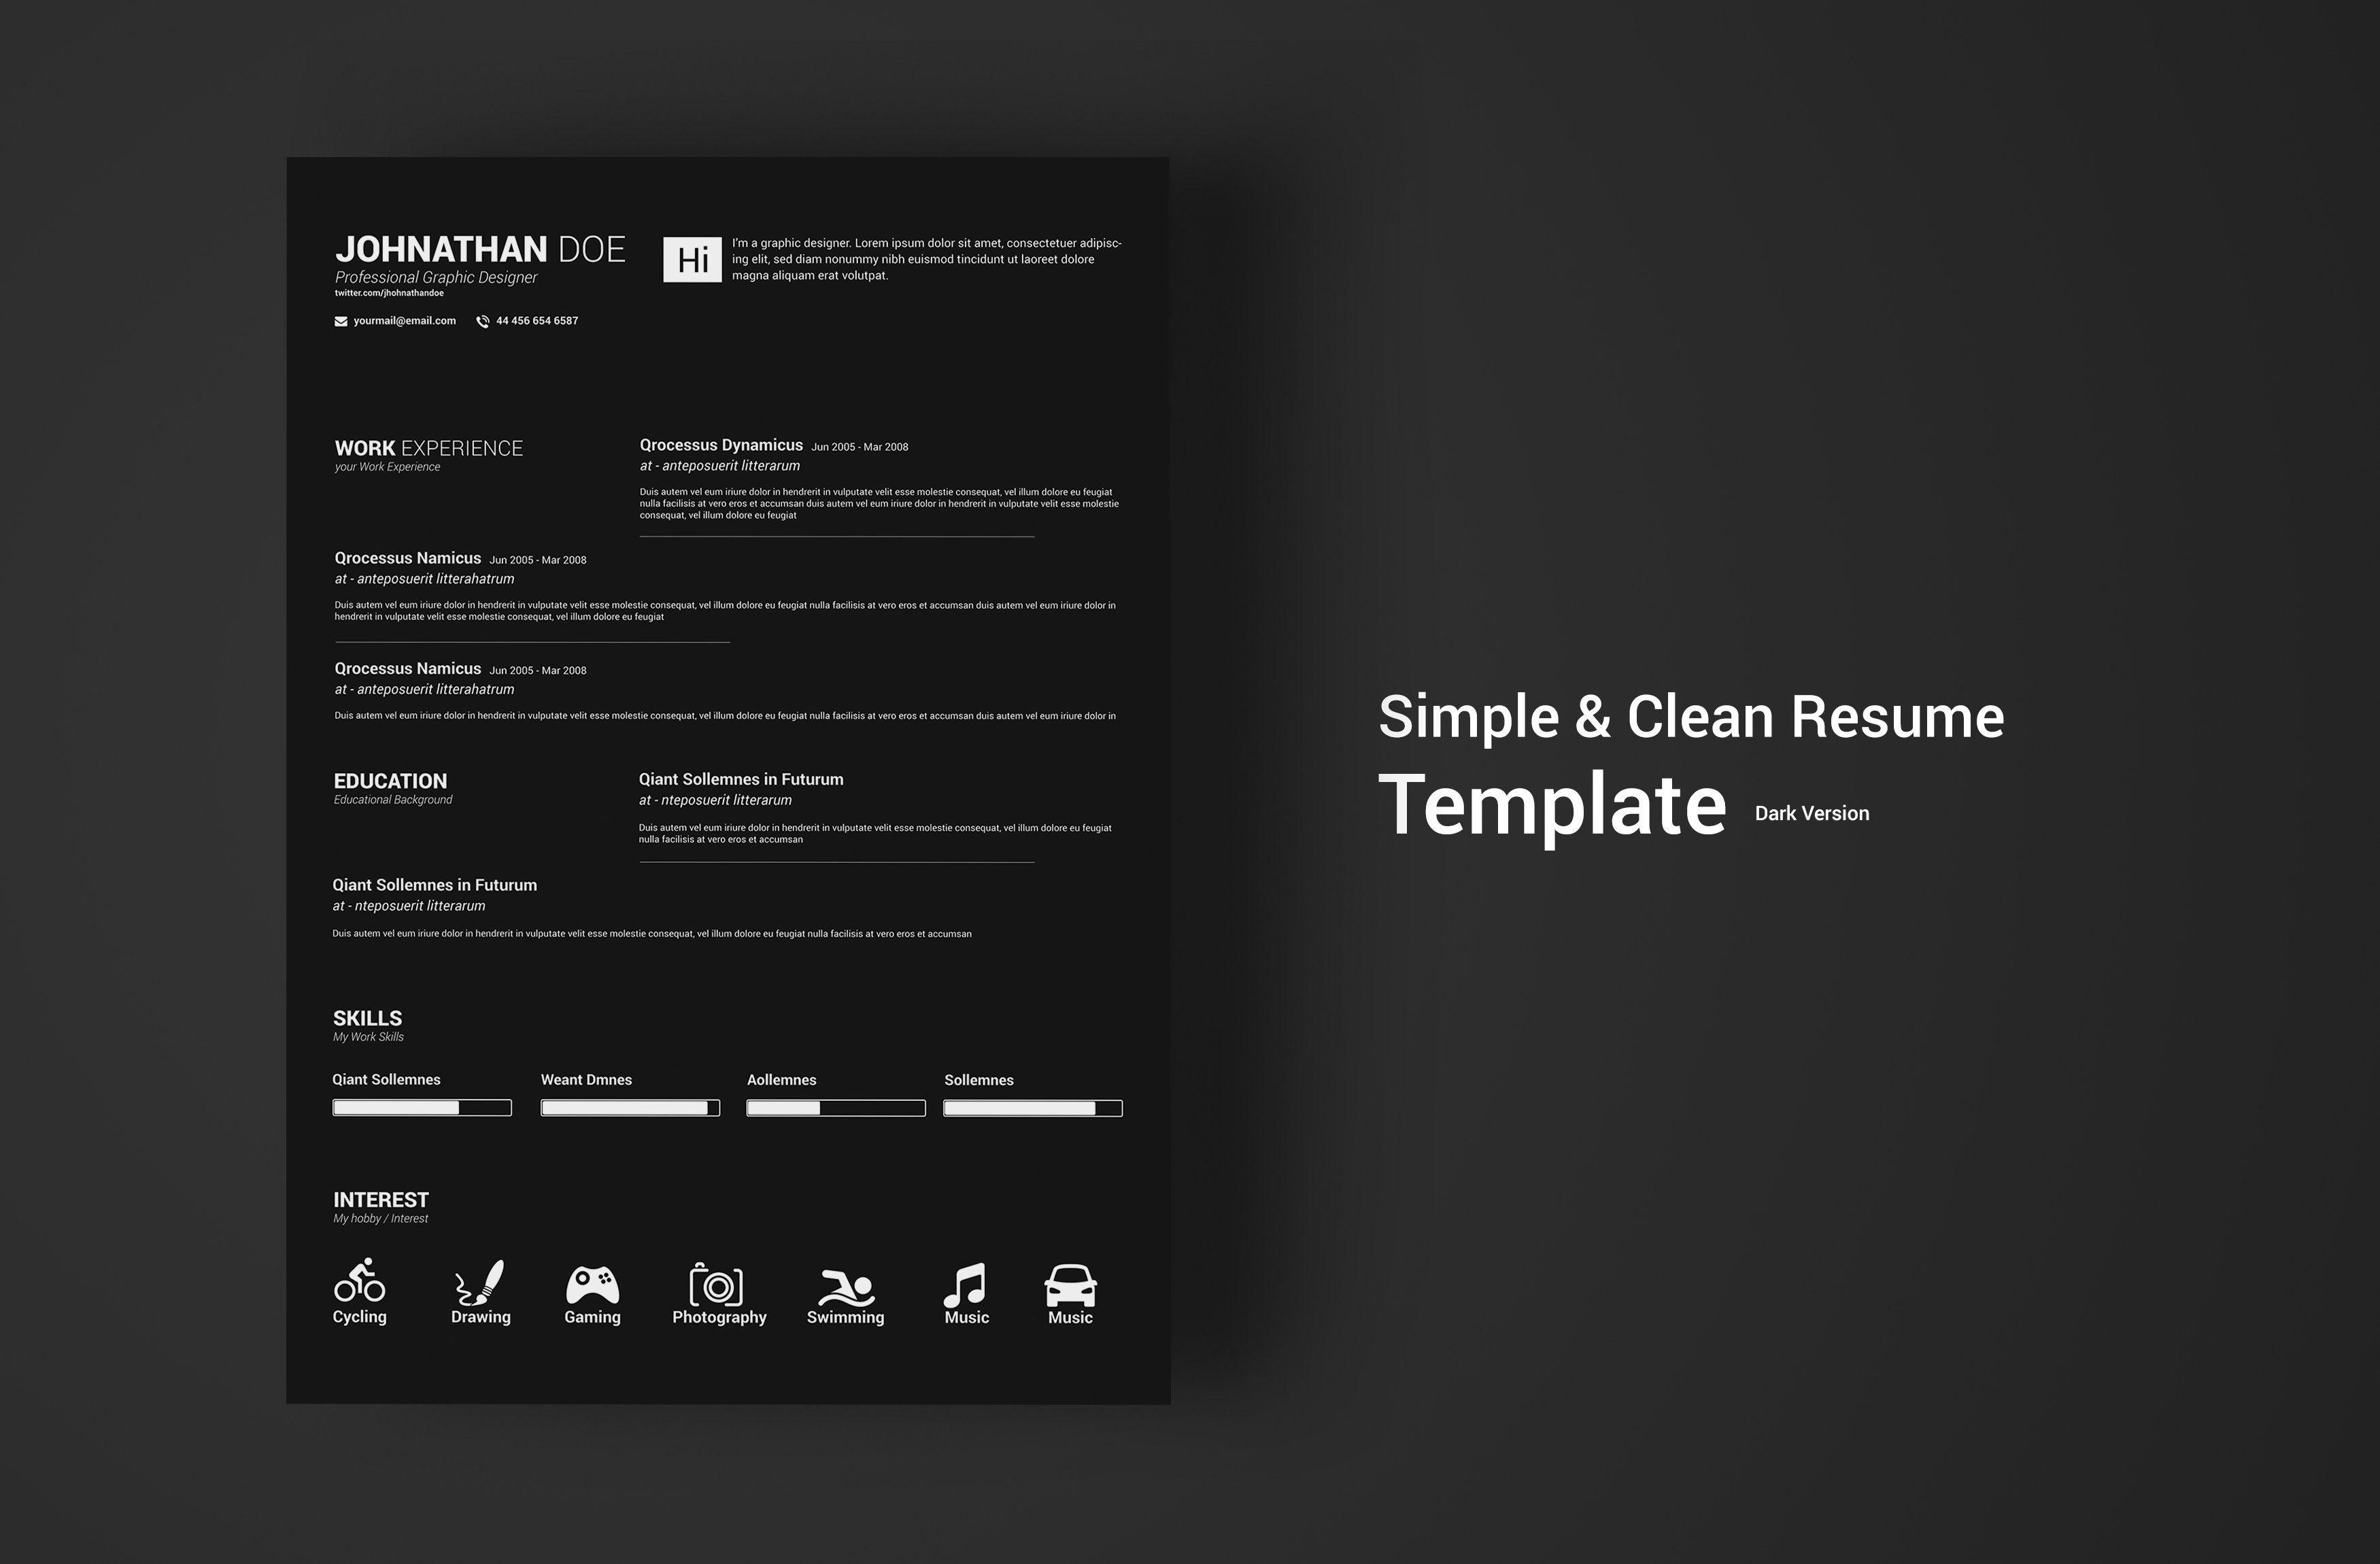 Simple & Clean Resume - Dark Version cover image.